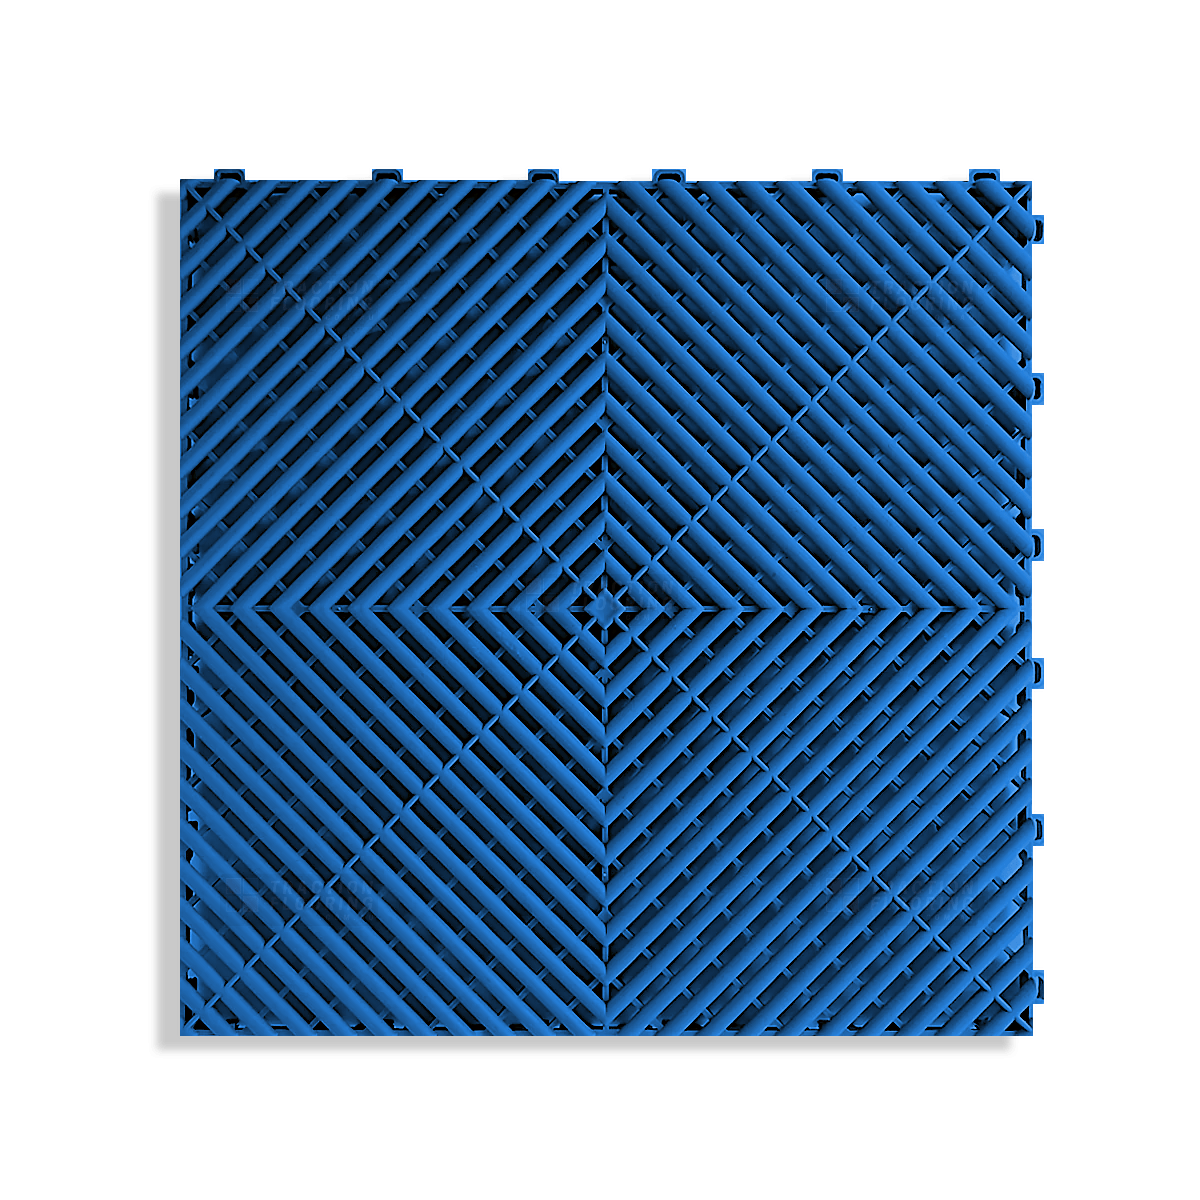 ULTRAGRID Garage Floor Tile 400x400x18mm, Riviera Blue